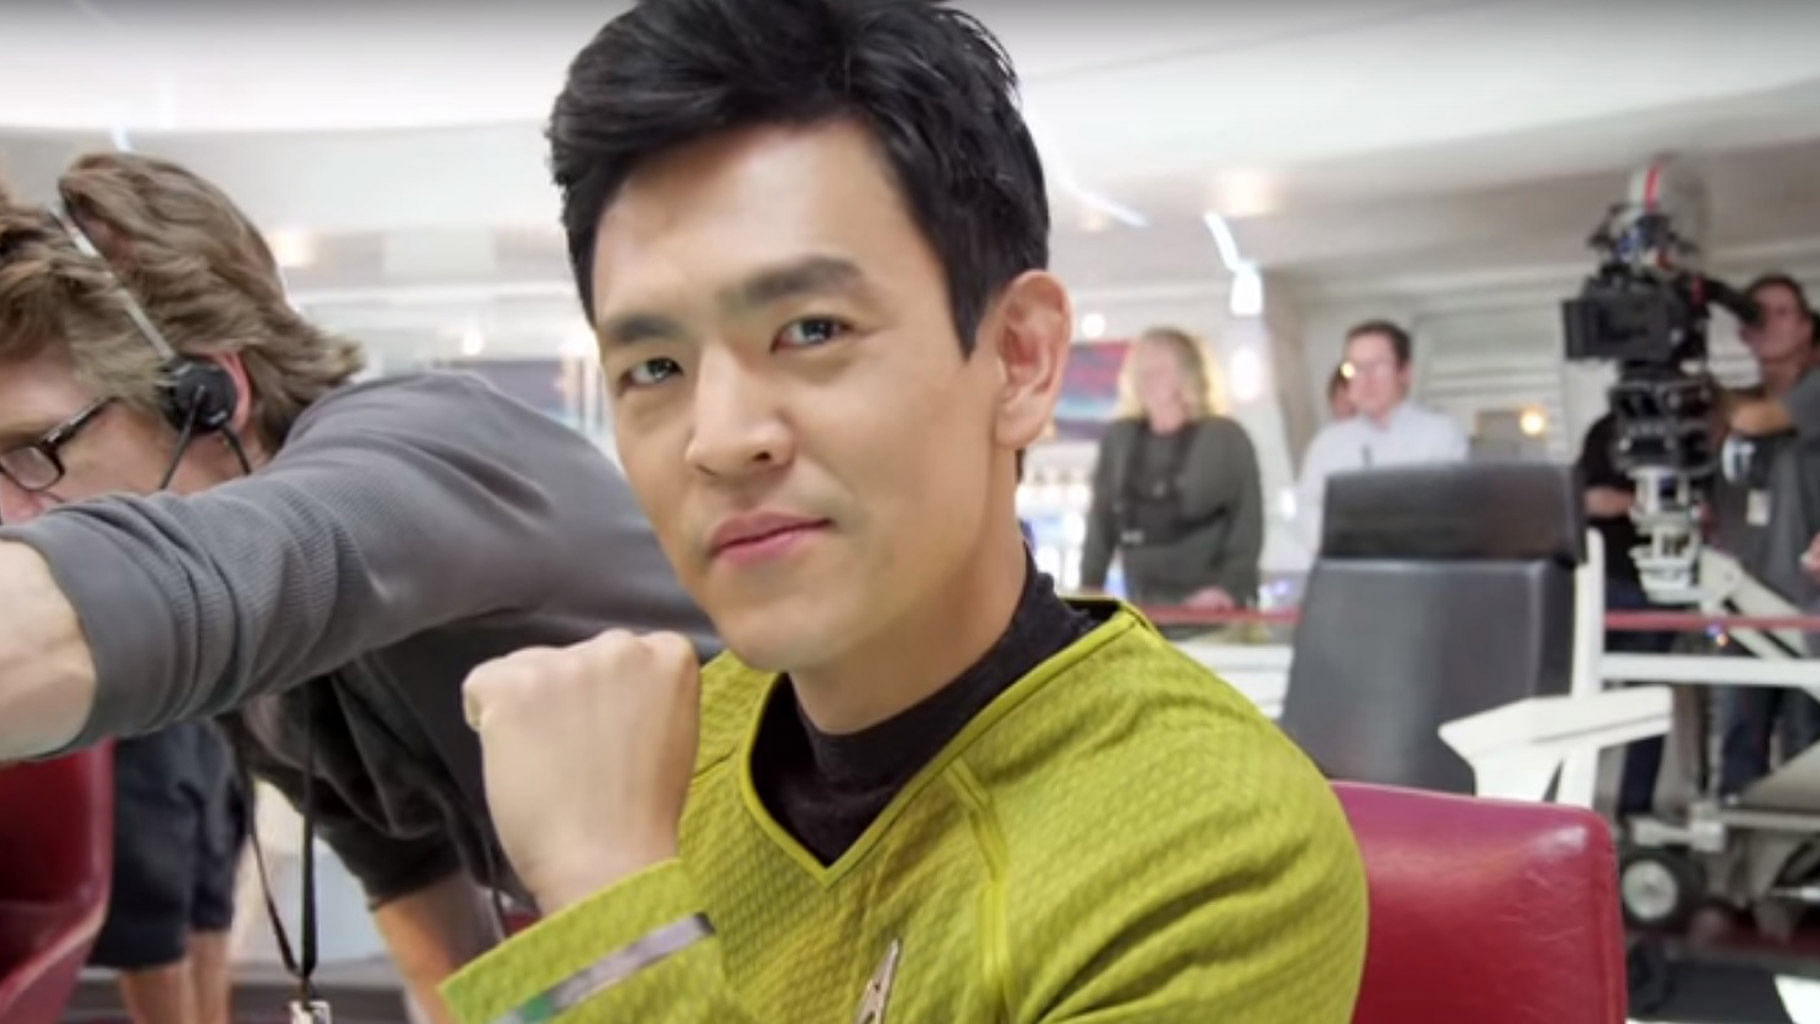 John Cho as Sulu. (Photo: <i>Star Trek Into Darkness</i><a href="https://www.youtube.com/watch?v=_t58Iy-UJ2M"> trailer</a>)